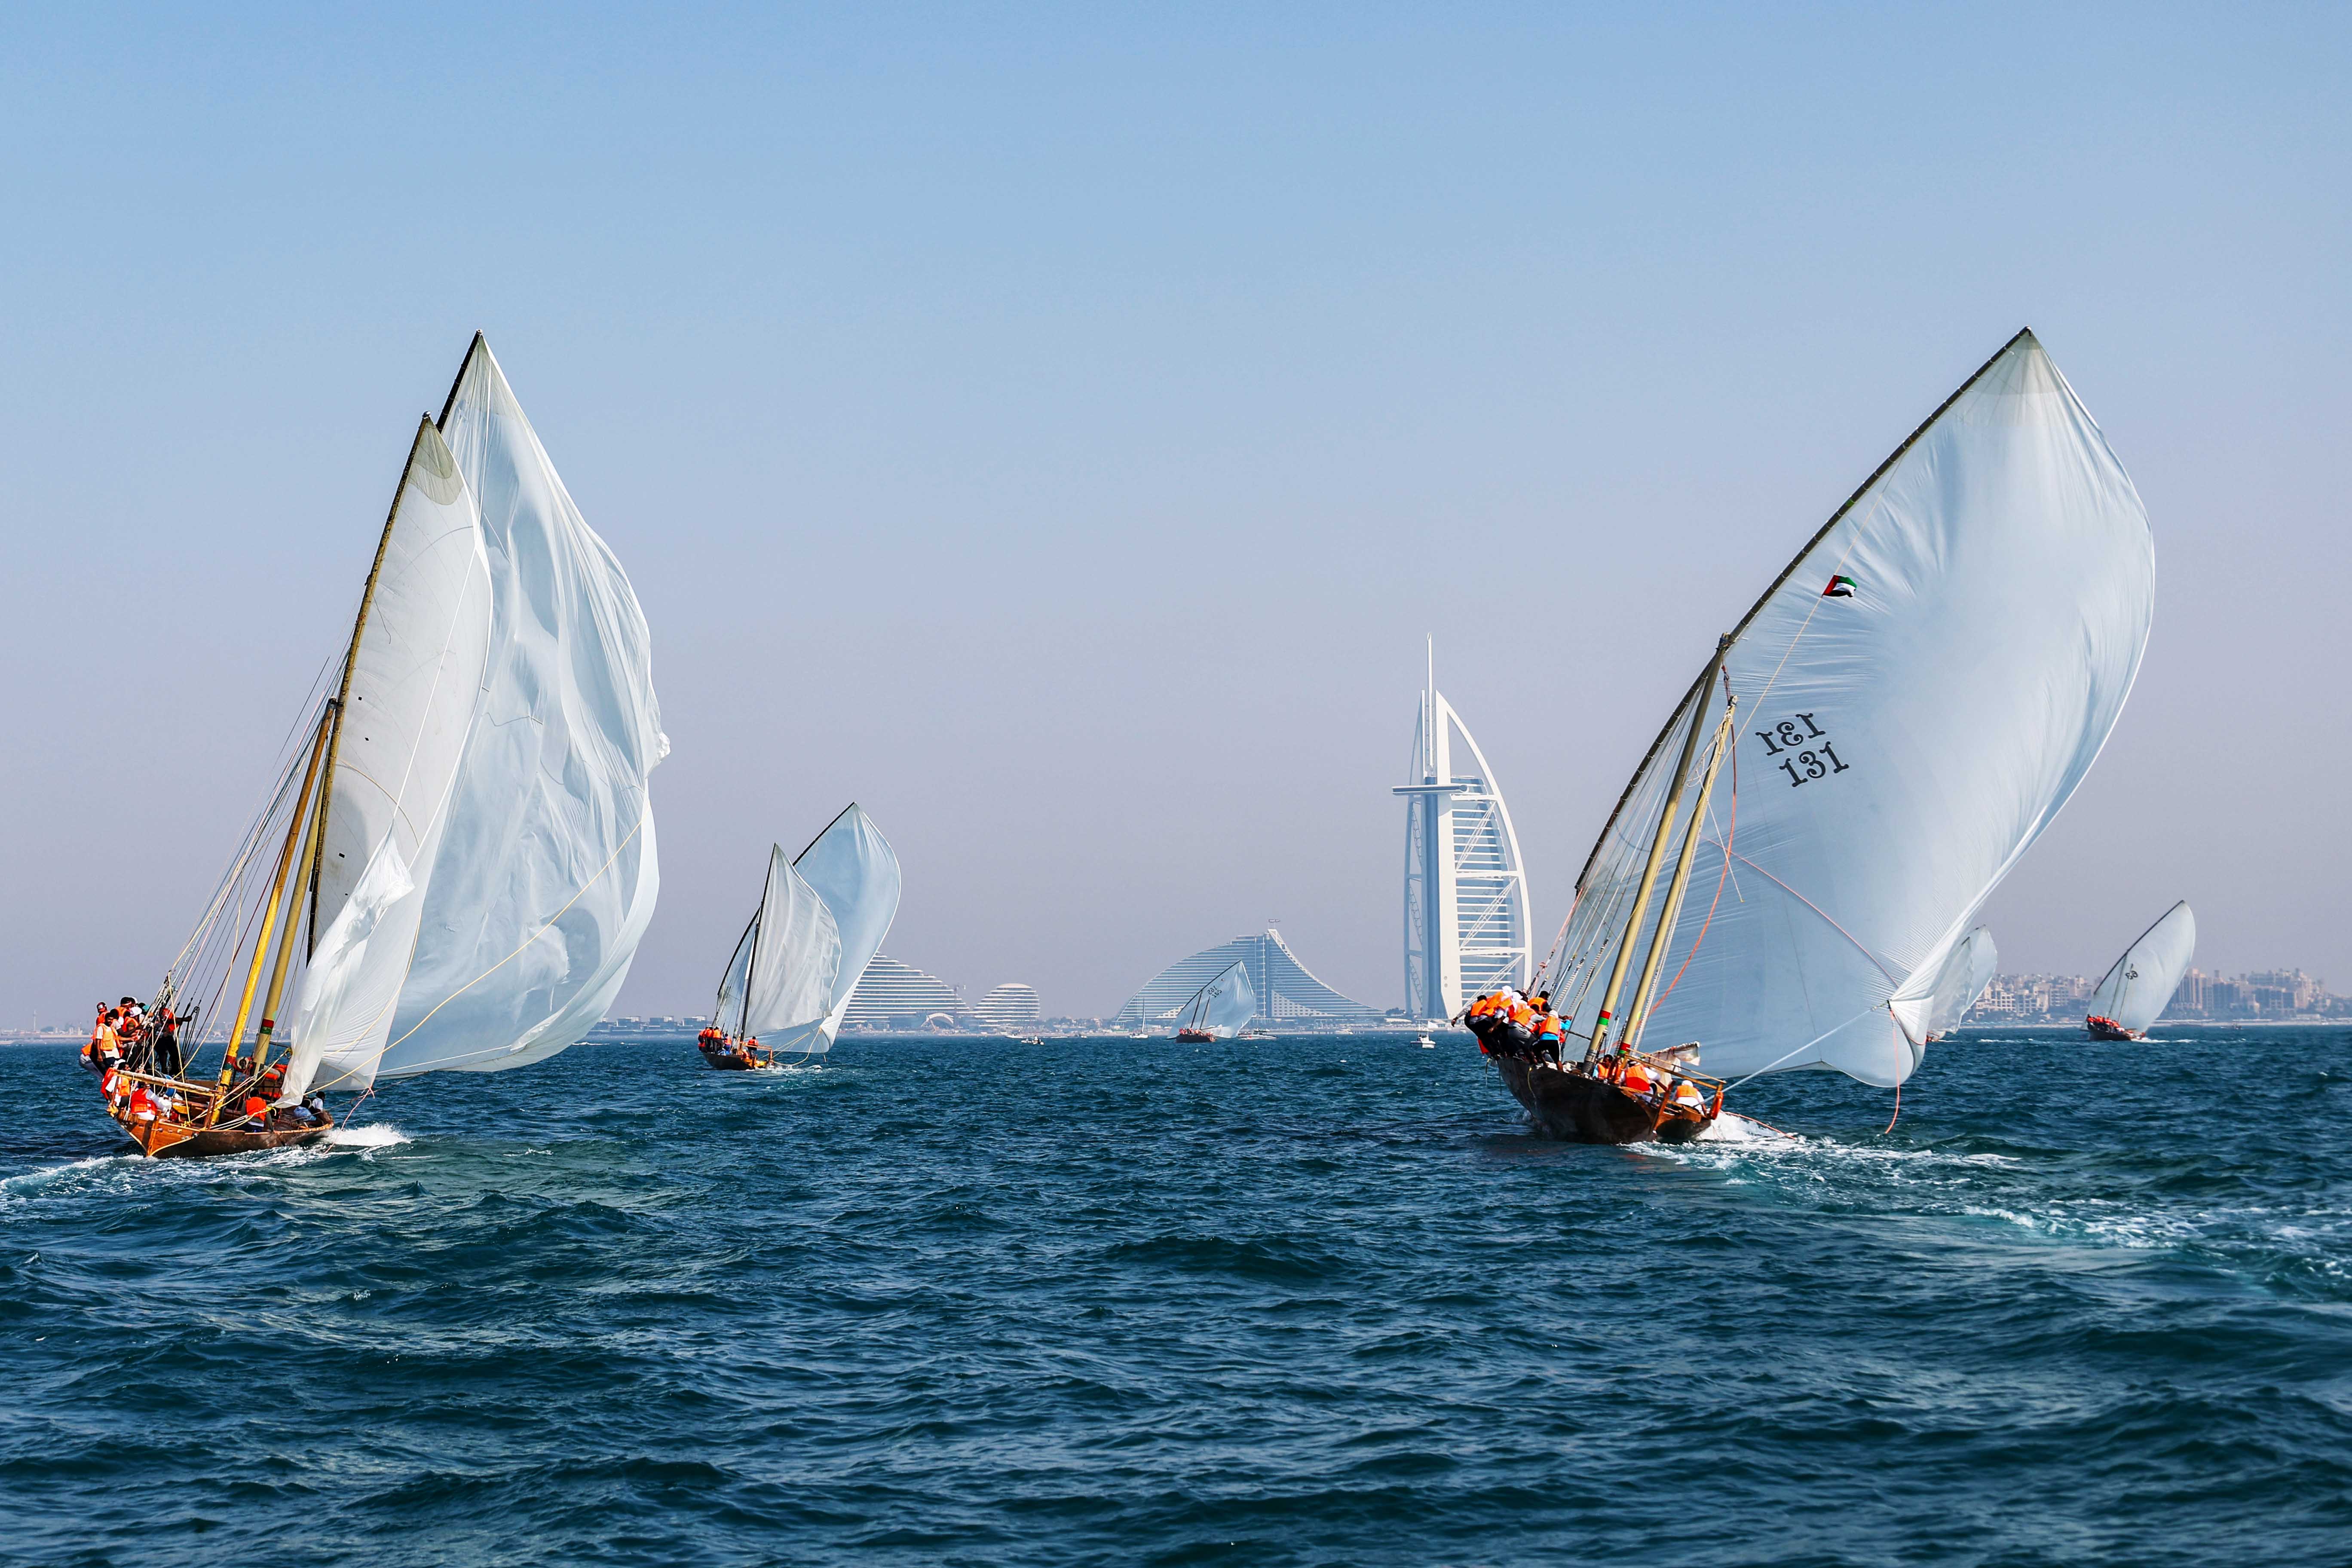 Dubai Traditional Dhow Sailing Race (60ft) Sails on Dubai Shore this Saturday